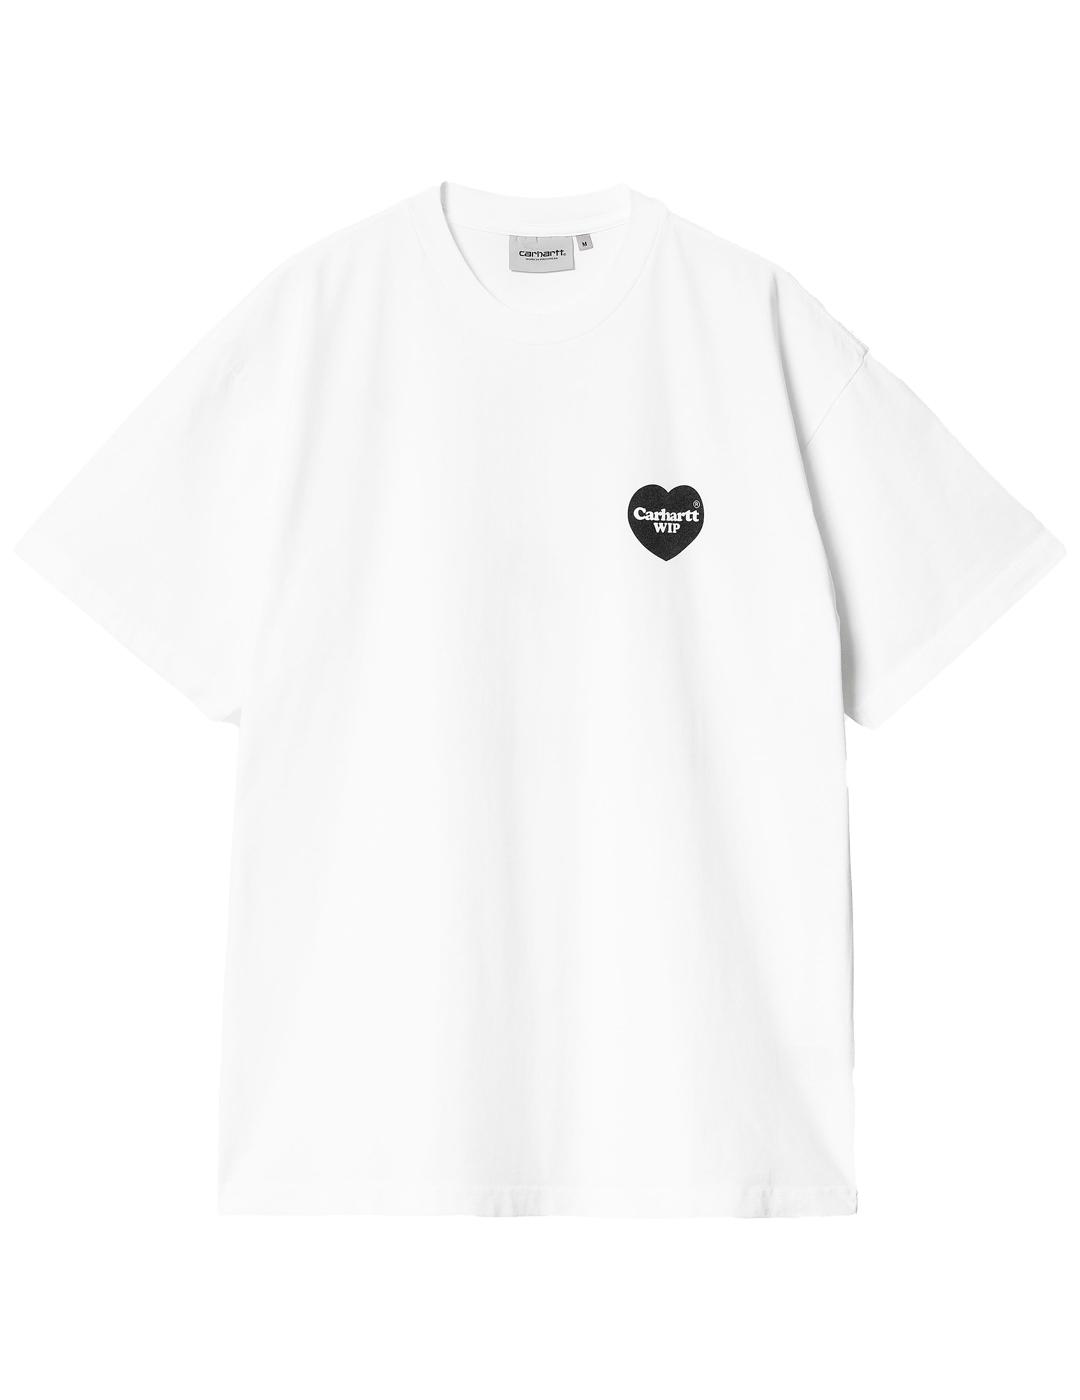 Camiseta Carhartt Wip Heart Bandana